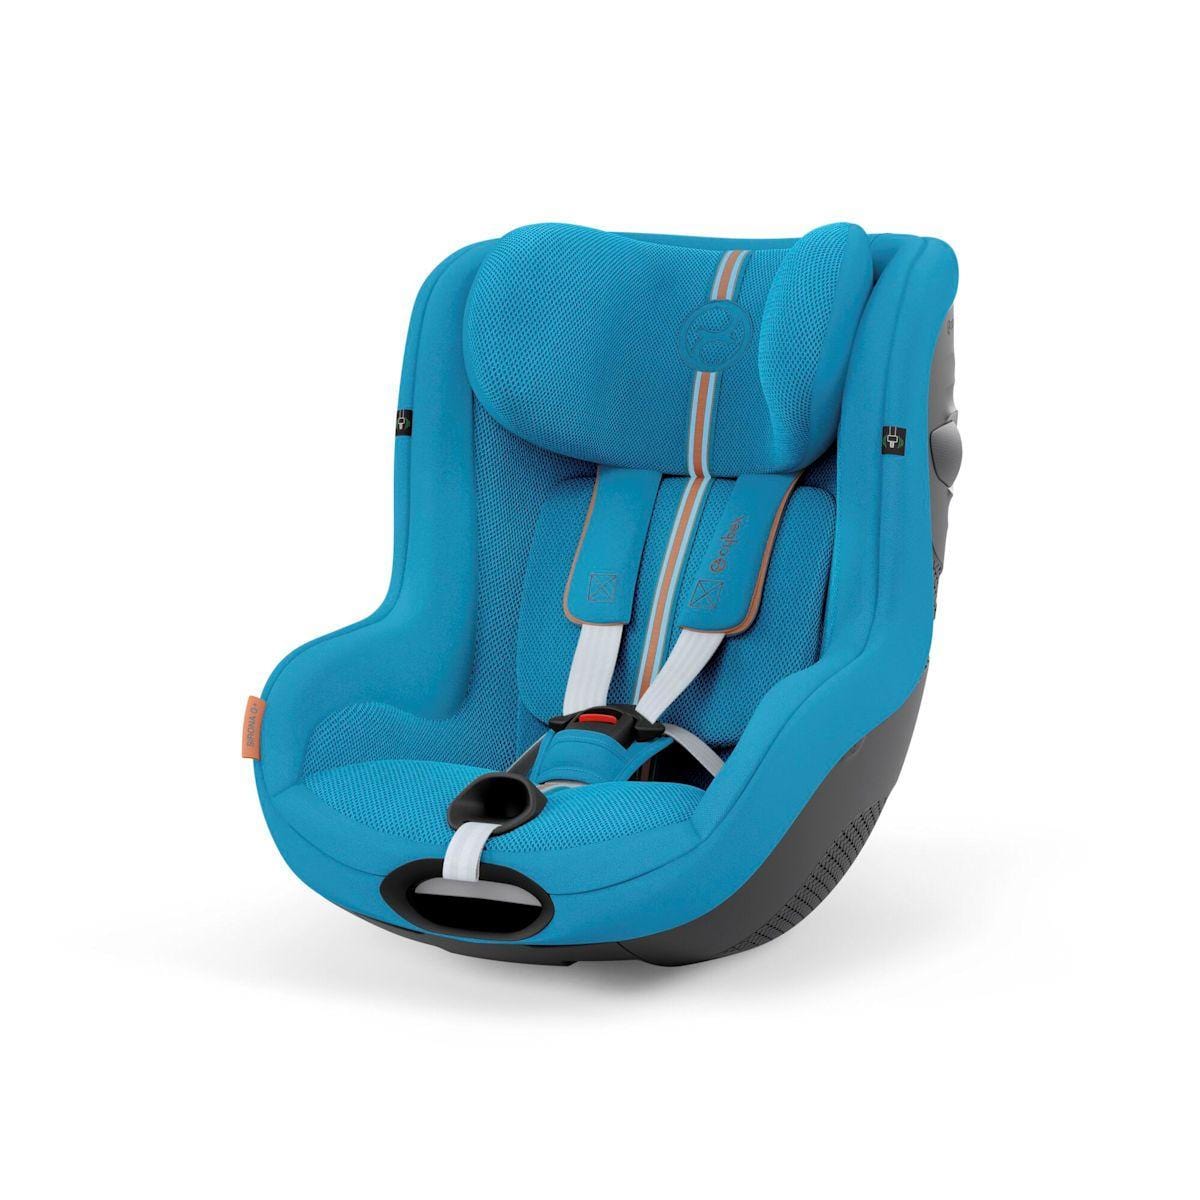 Cybex baby car seats Cybex G PLUS i-Size Car Seat Bundle - Beach Blue 15302-BEA-BLU